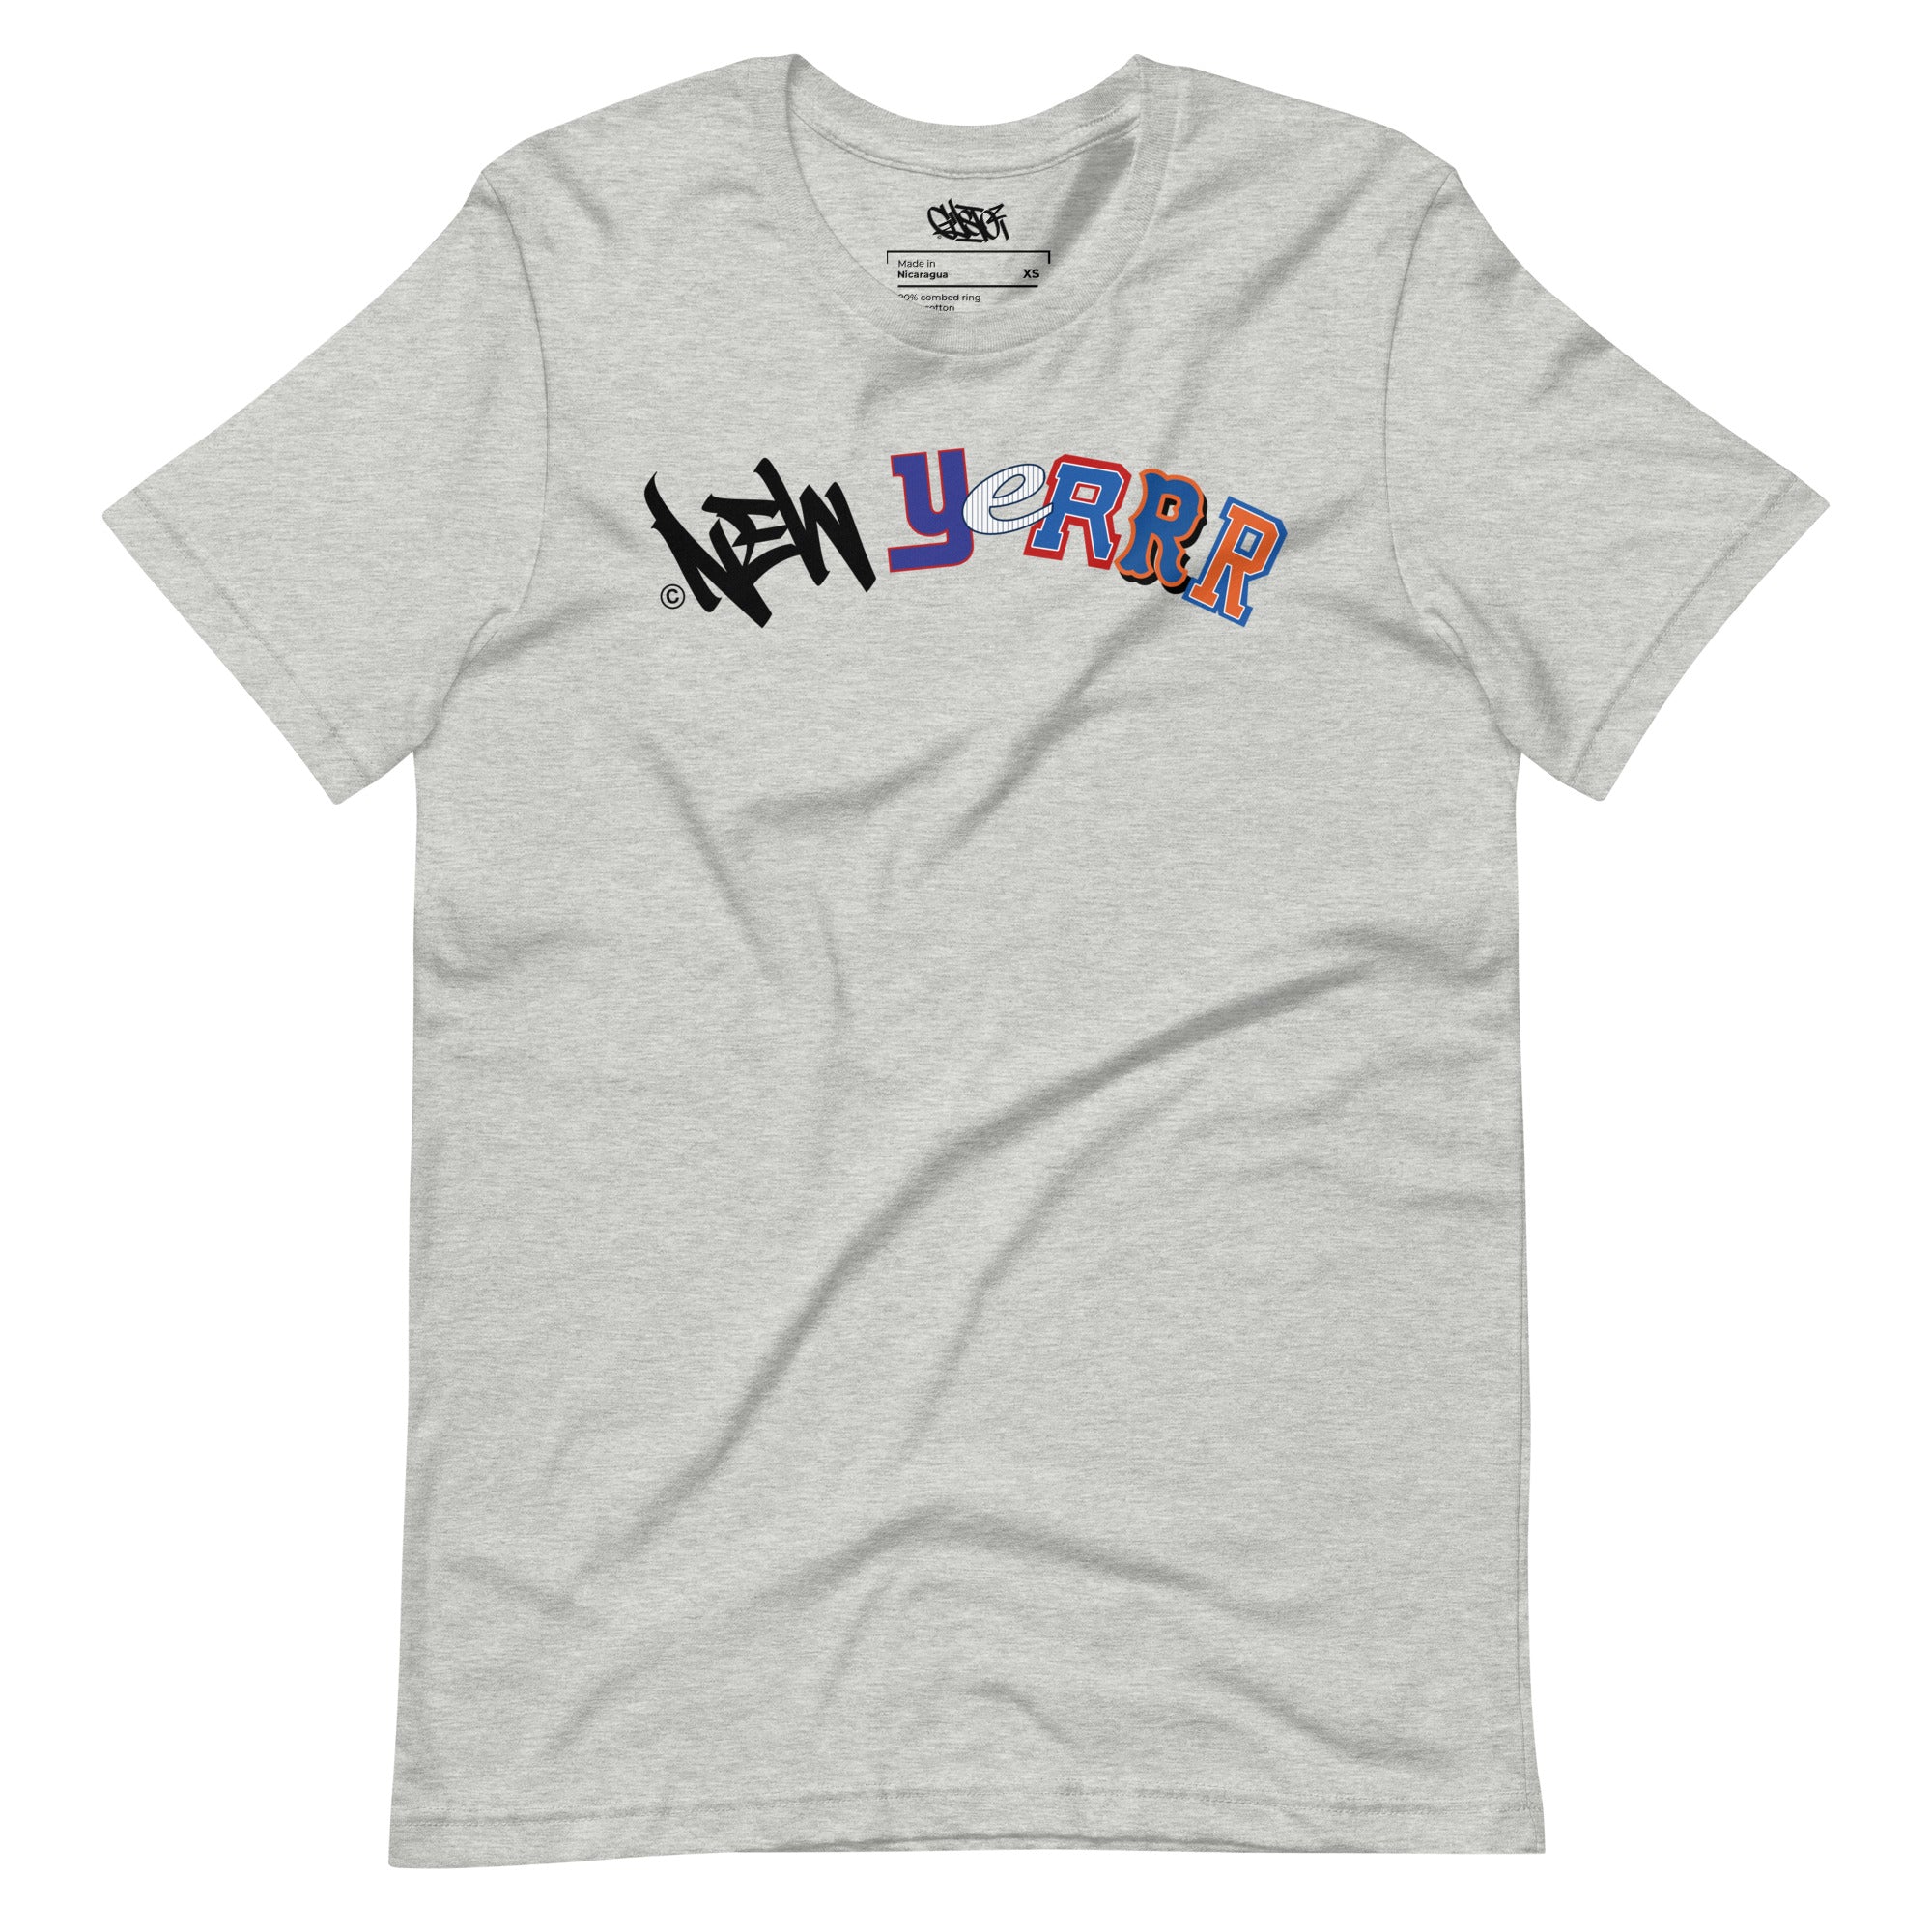 "New Yerrr" Home Team - Unisex T-Shirt